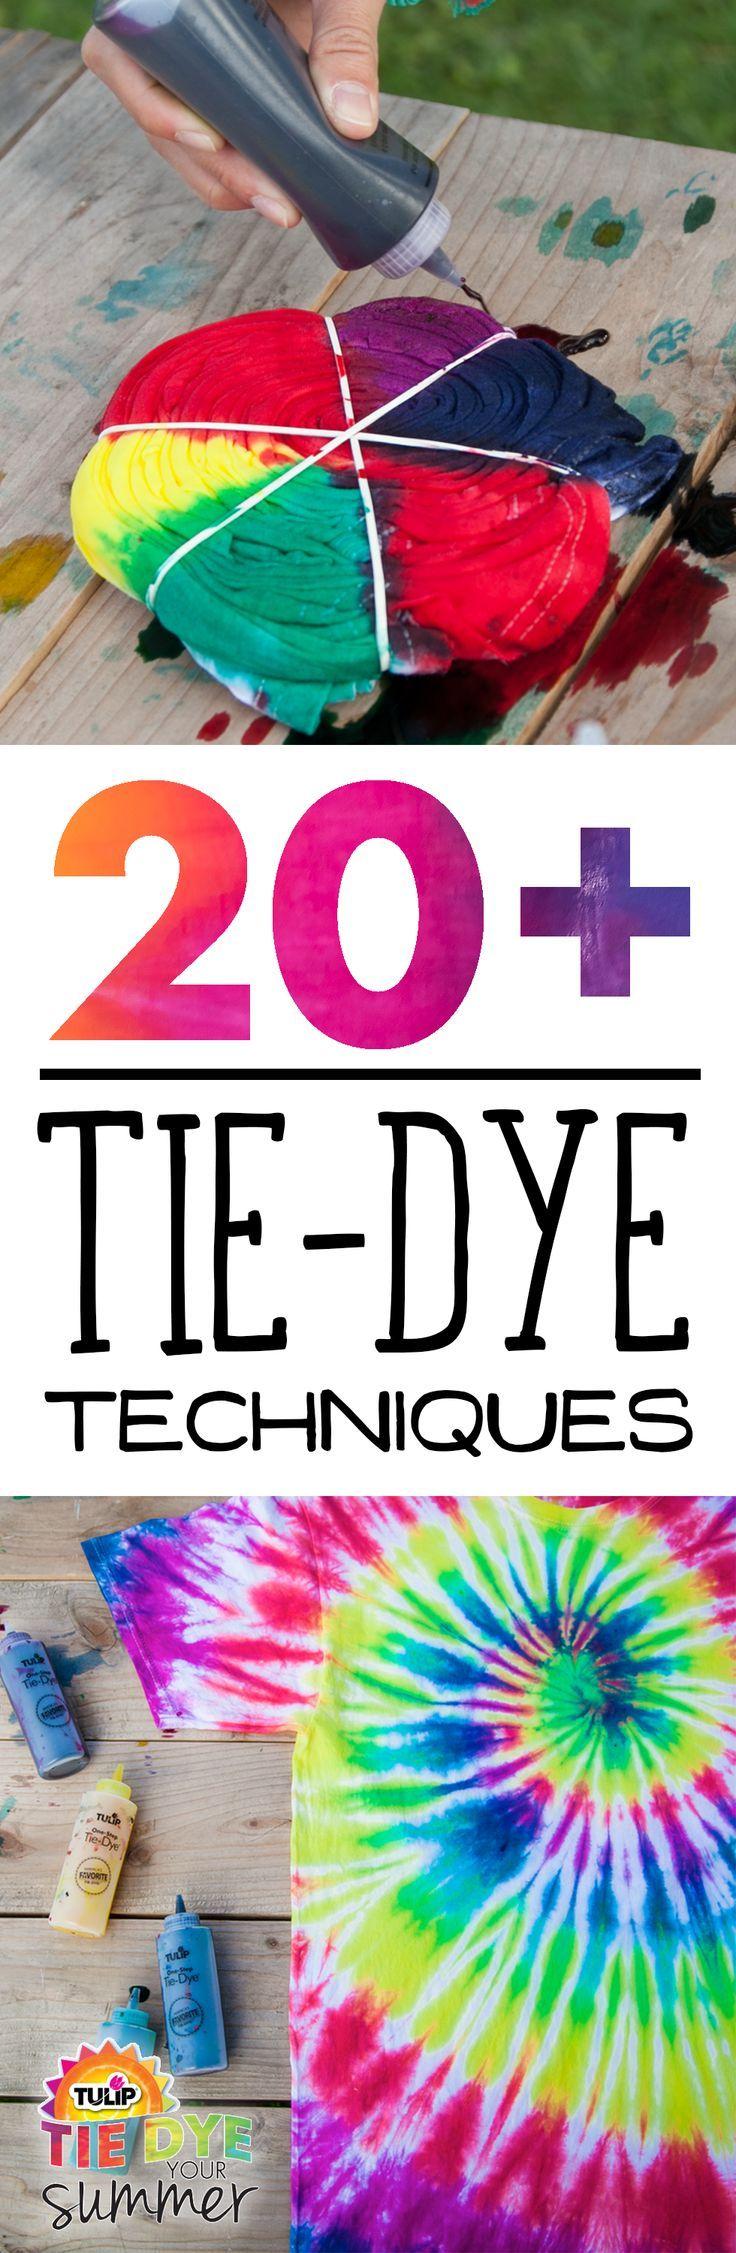 Hochzeit - Tie-Dye Techniques